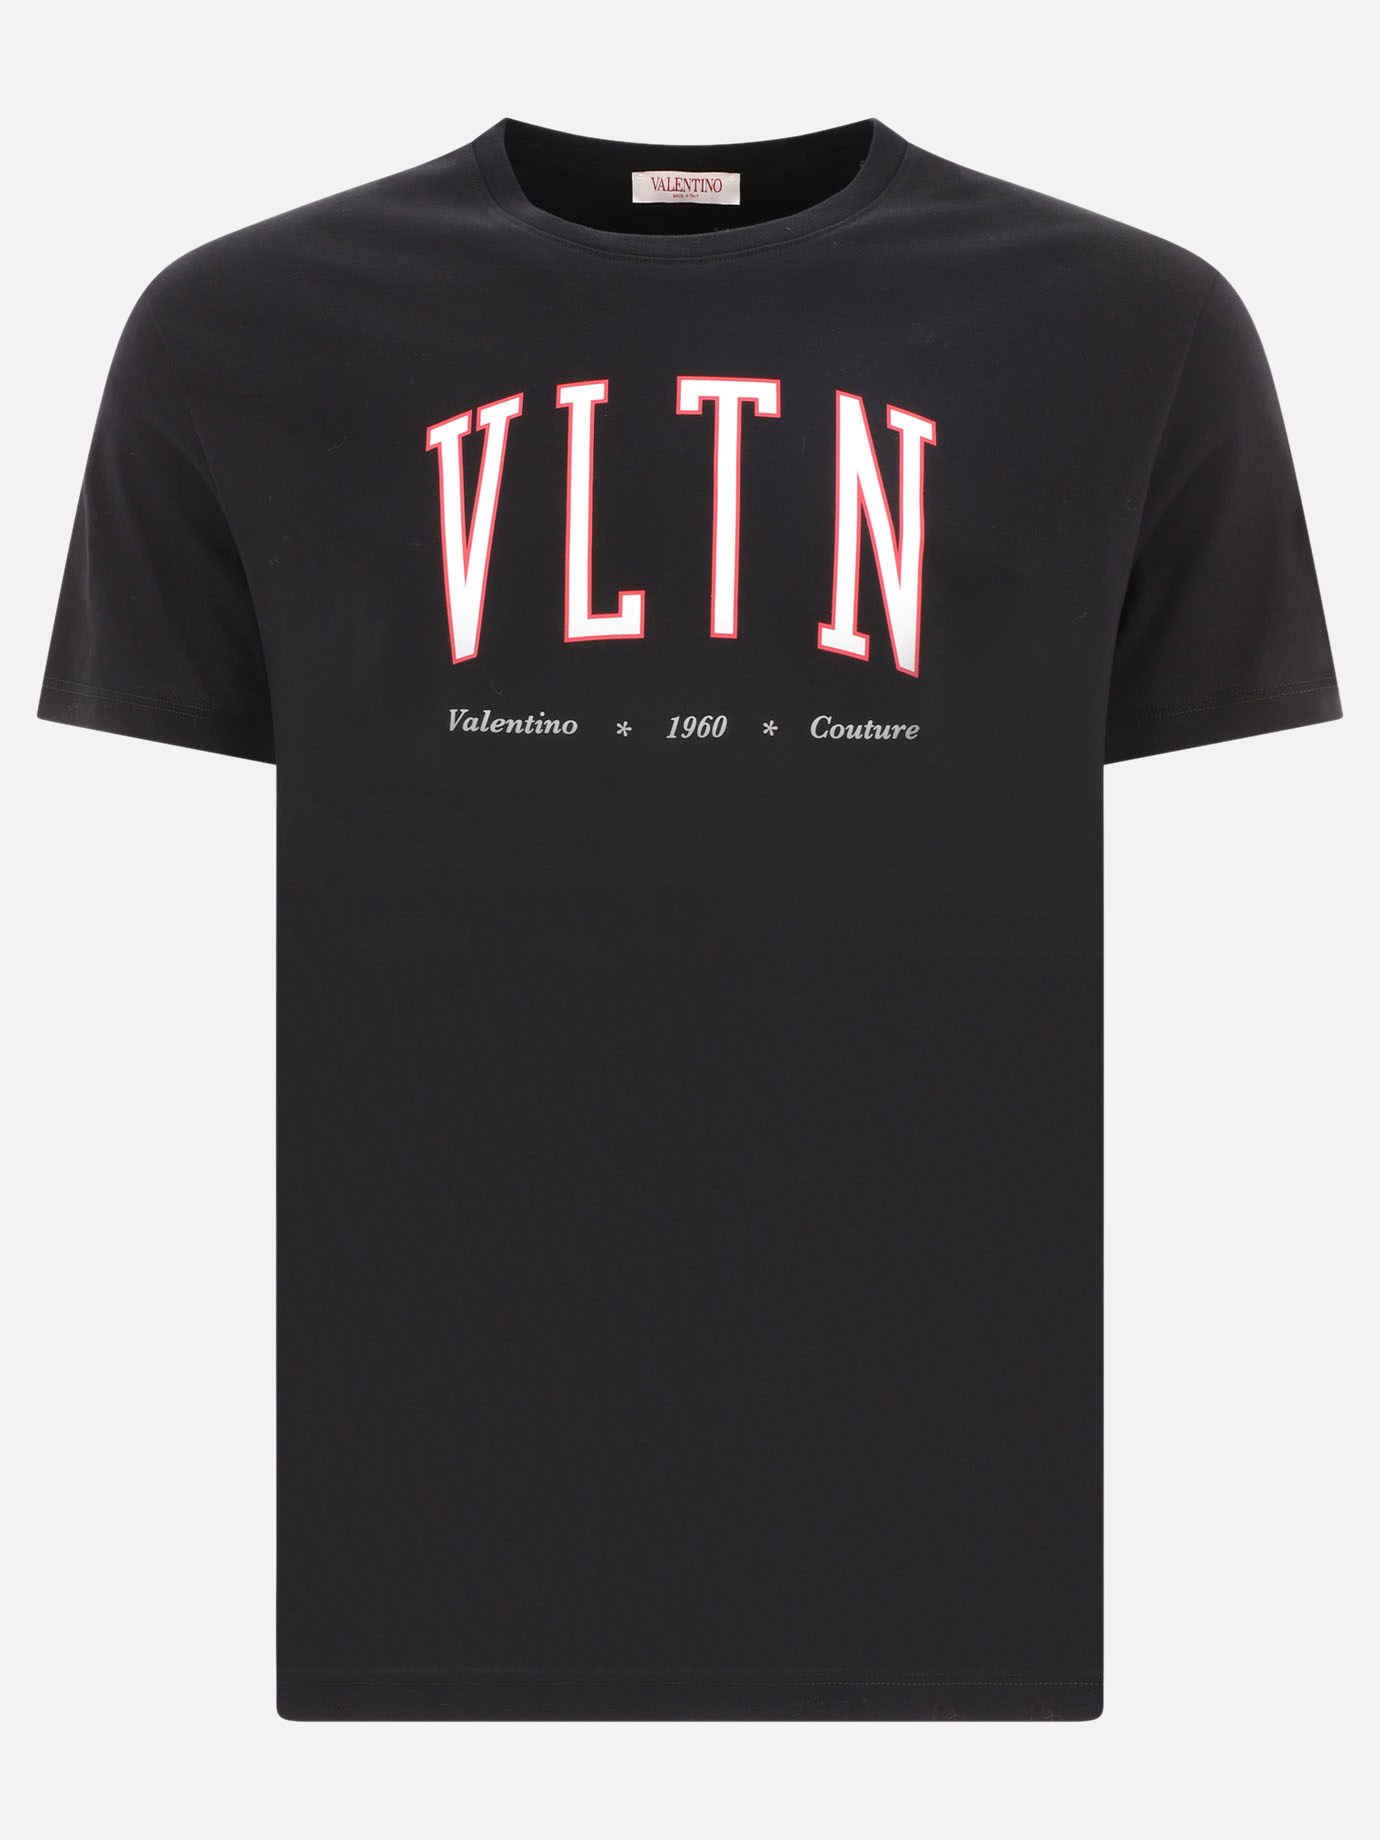 T-shirt  VLTN by Valentino - 3